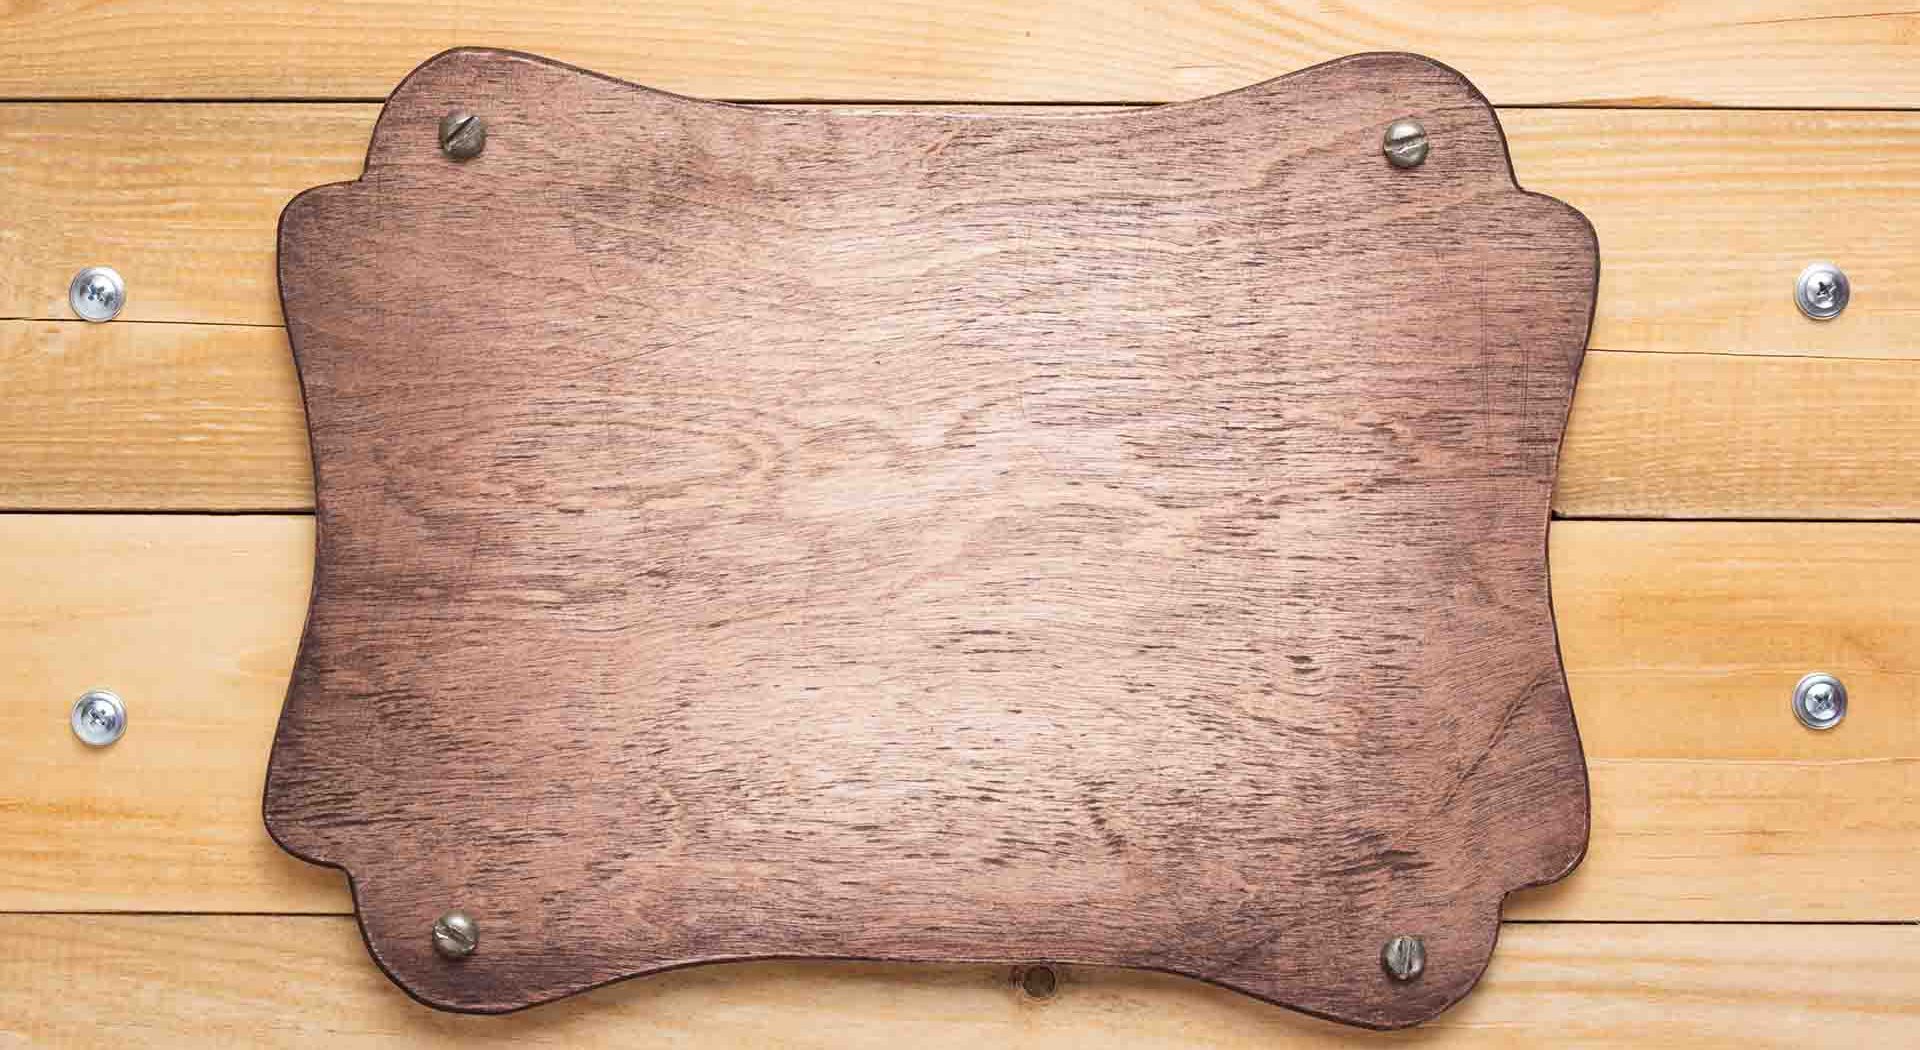 How do you make custom wood signs?